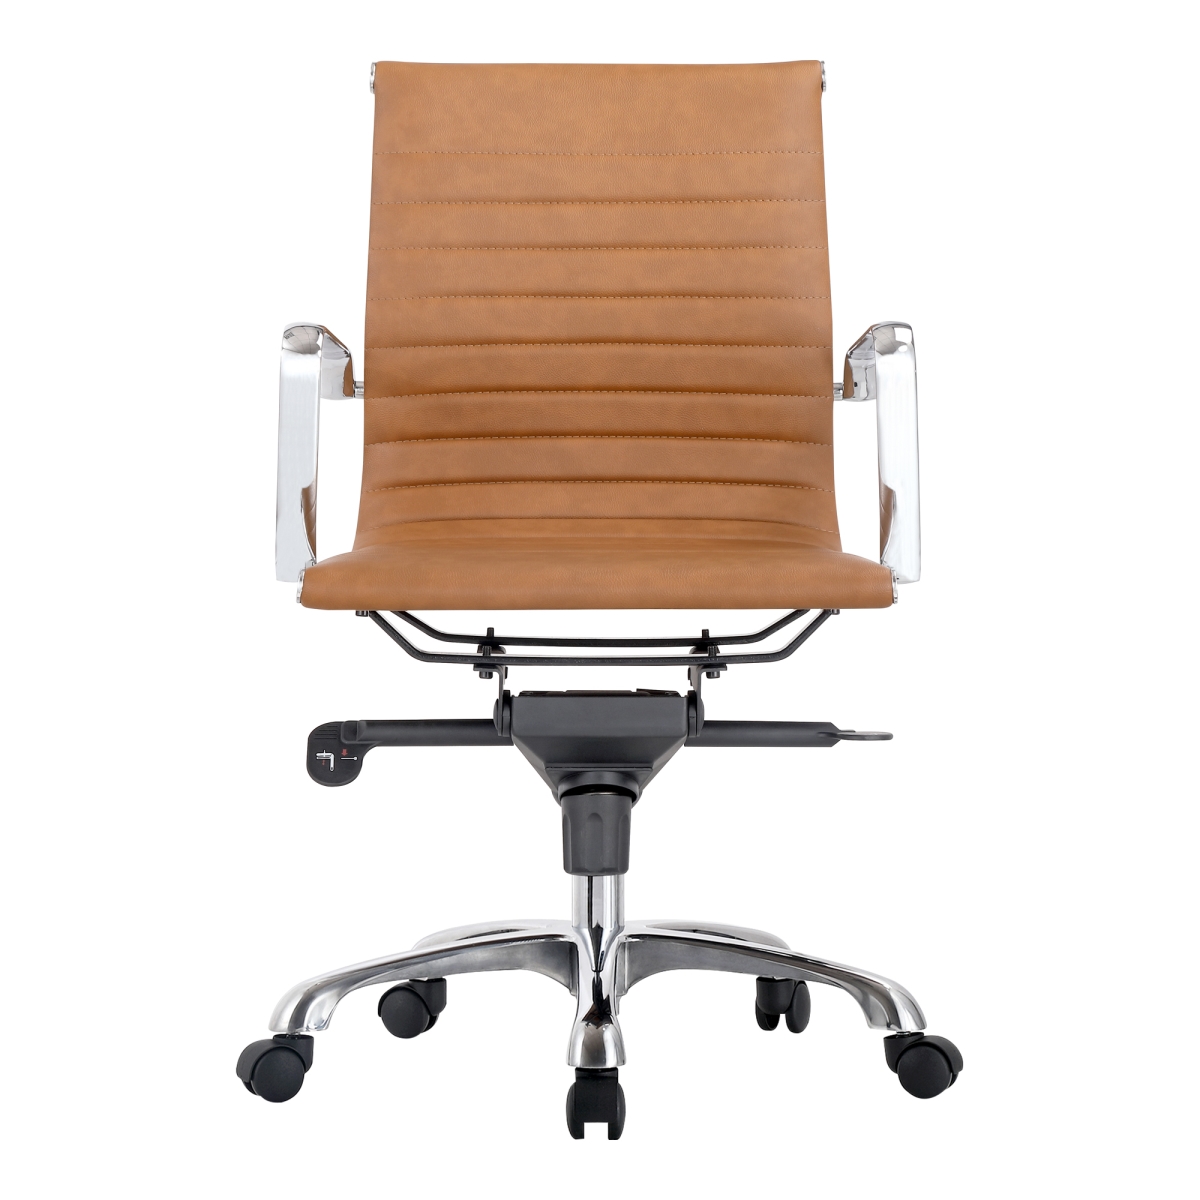 Zm-1002-40 Omega Low Back Swivel Office Chair, Tan